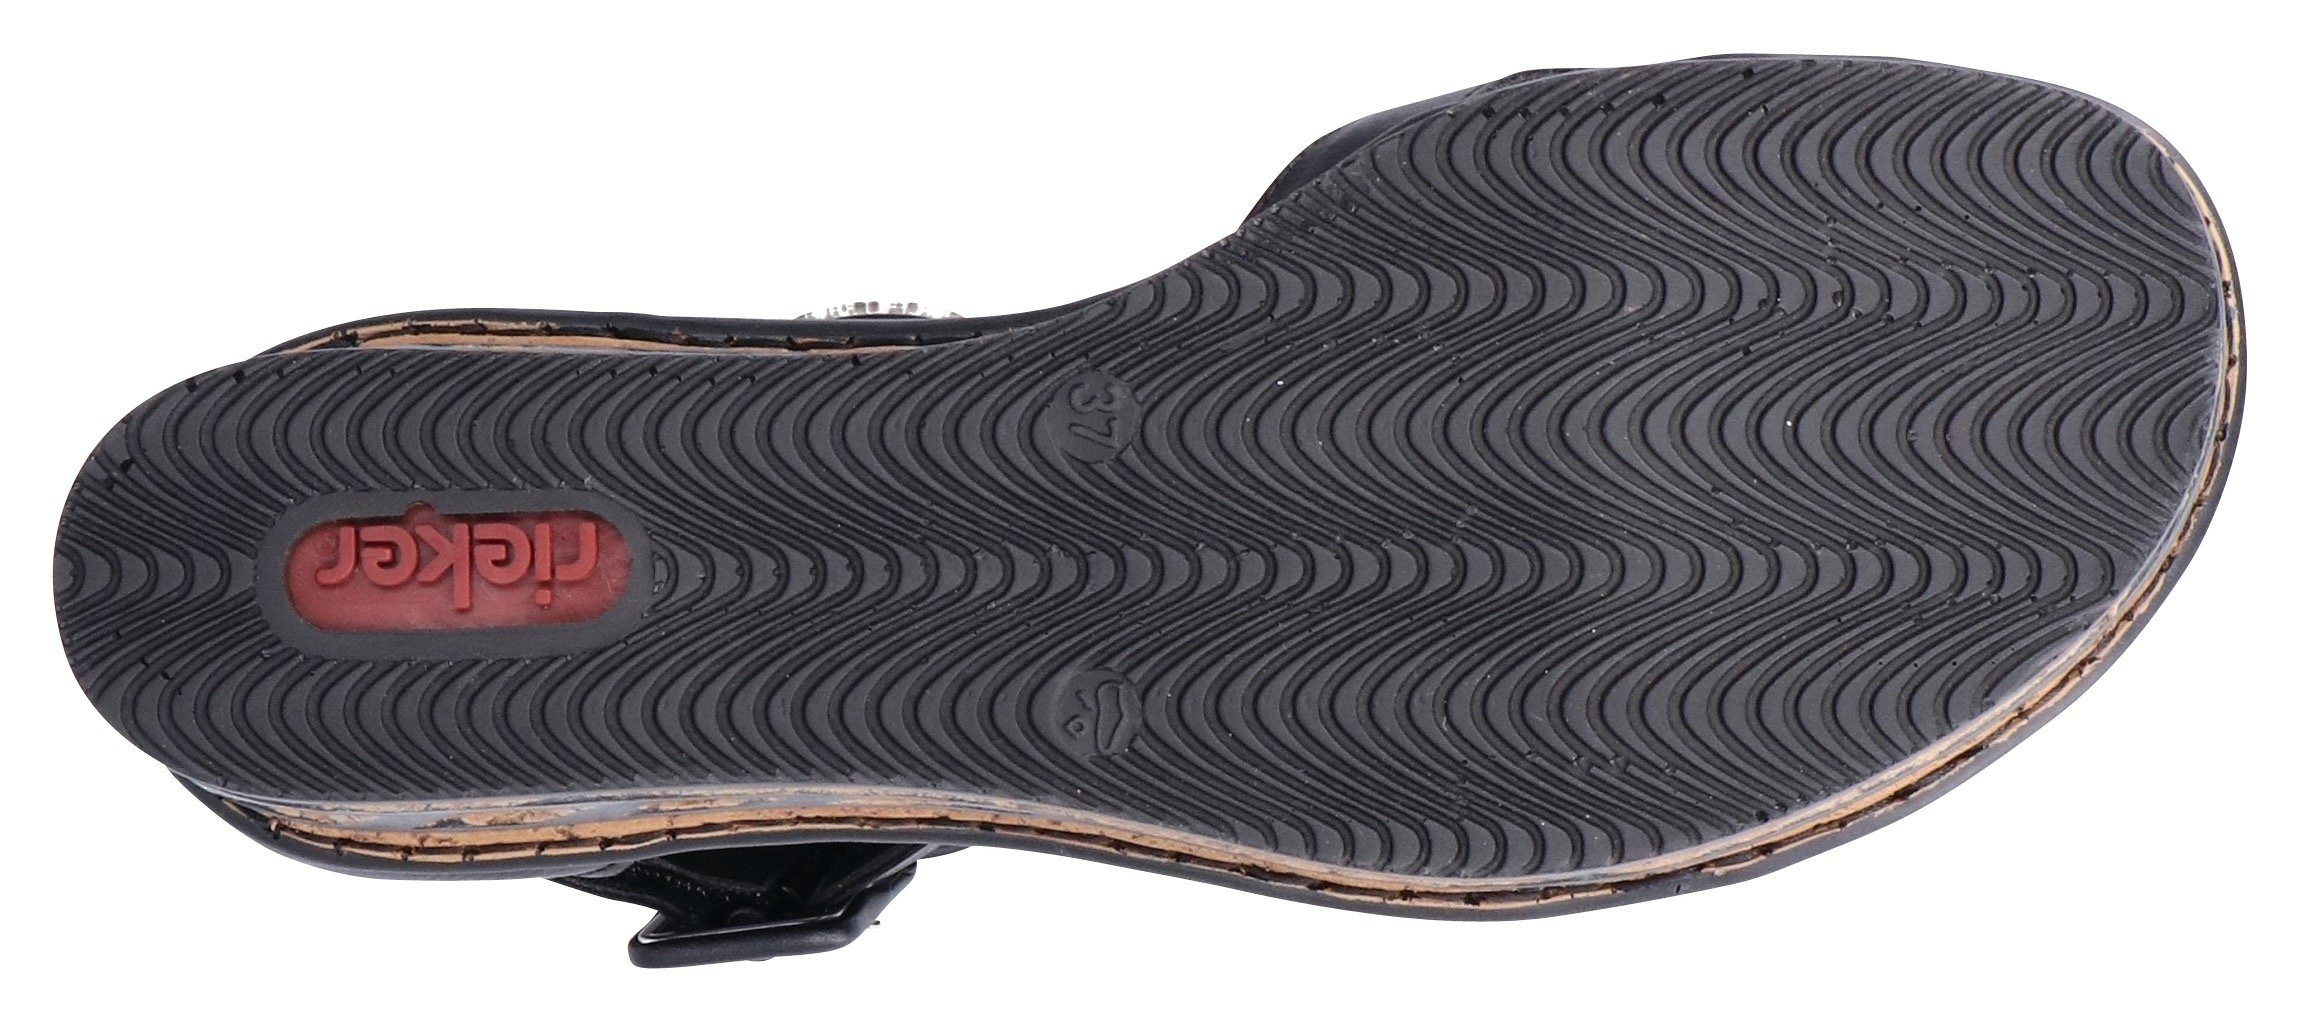 Sandalette Laufsohle Kork-Optik Rieker in mit trendiger